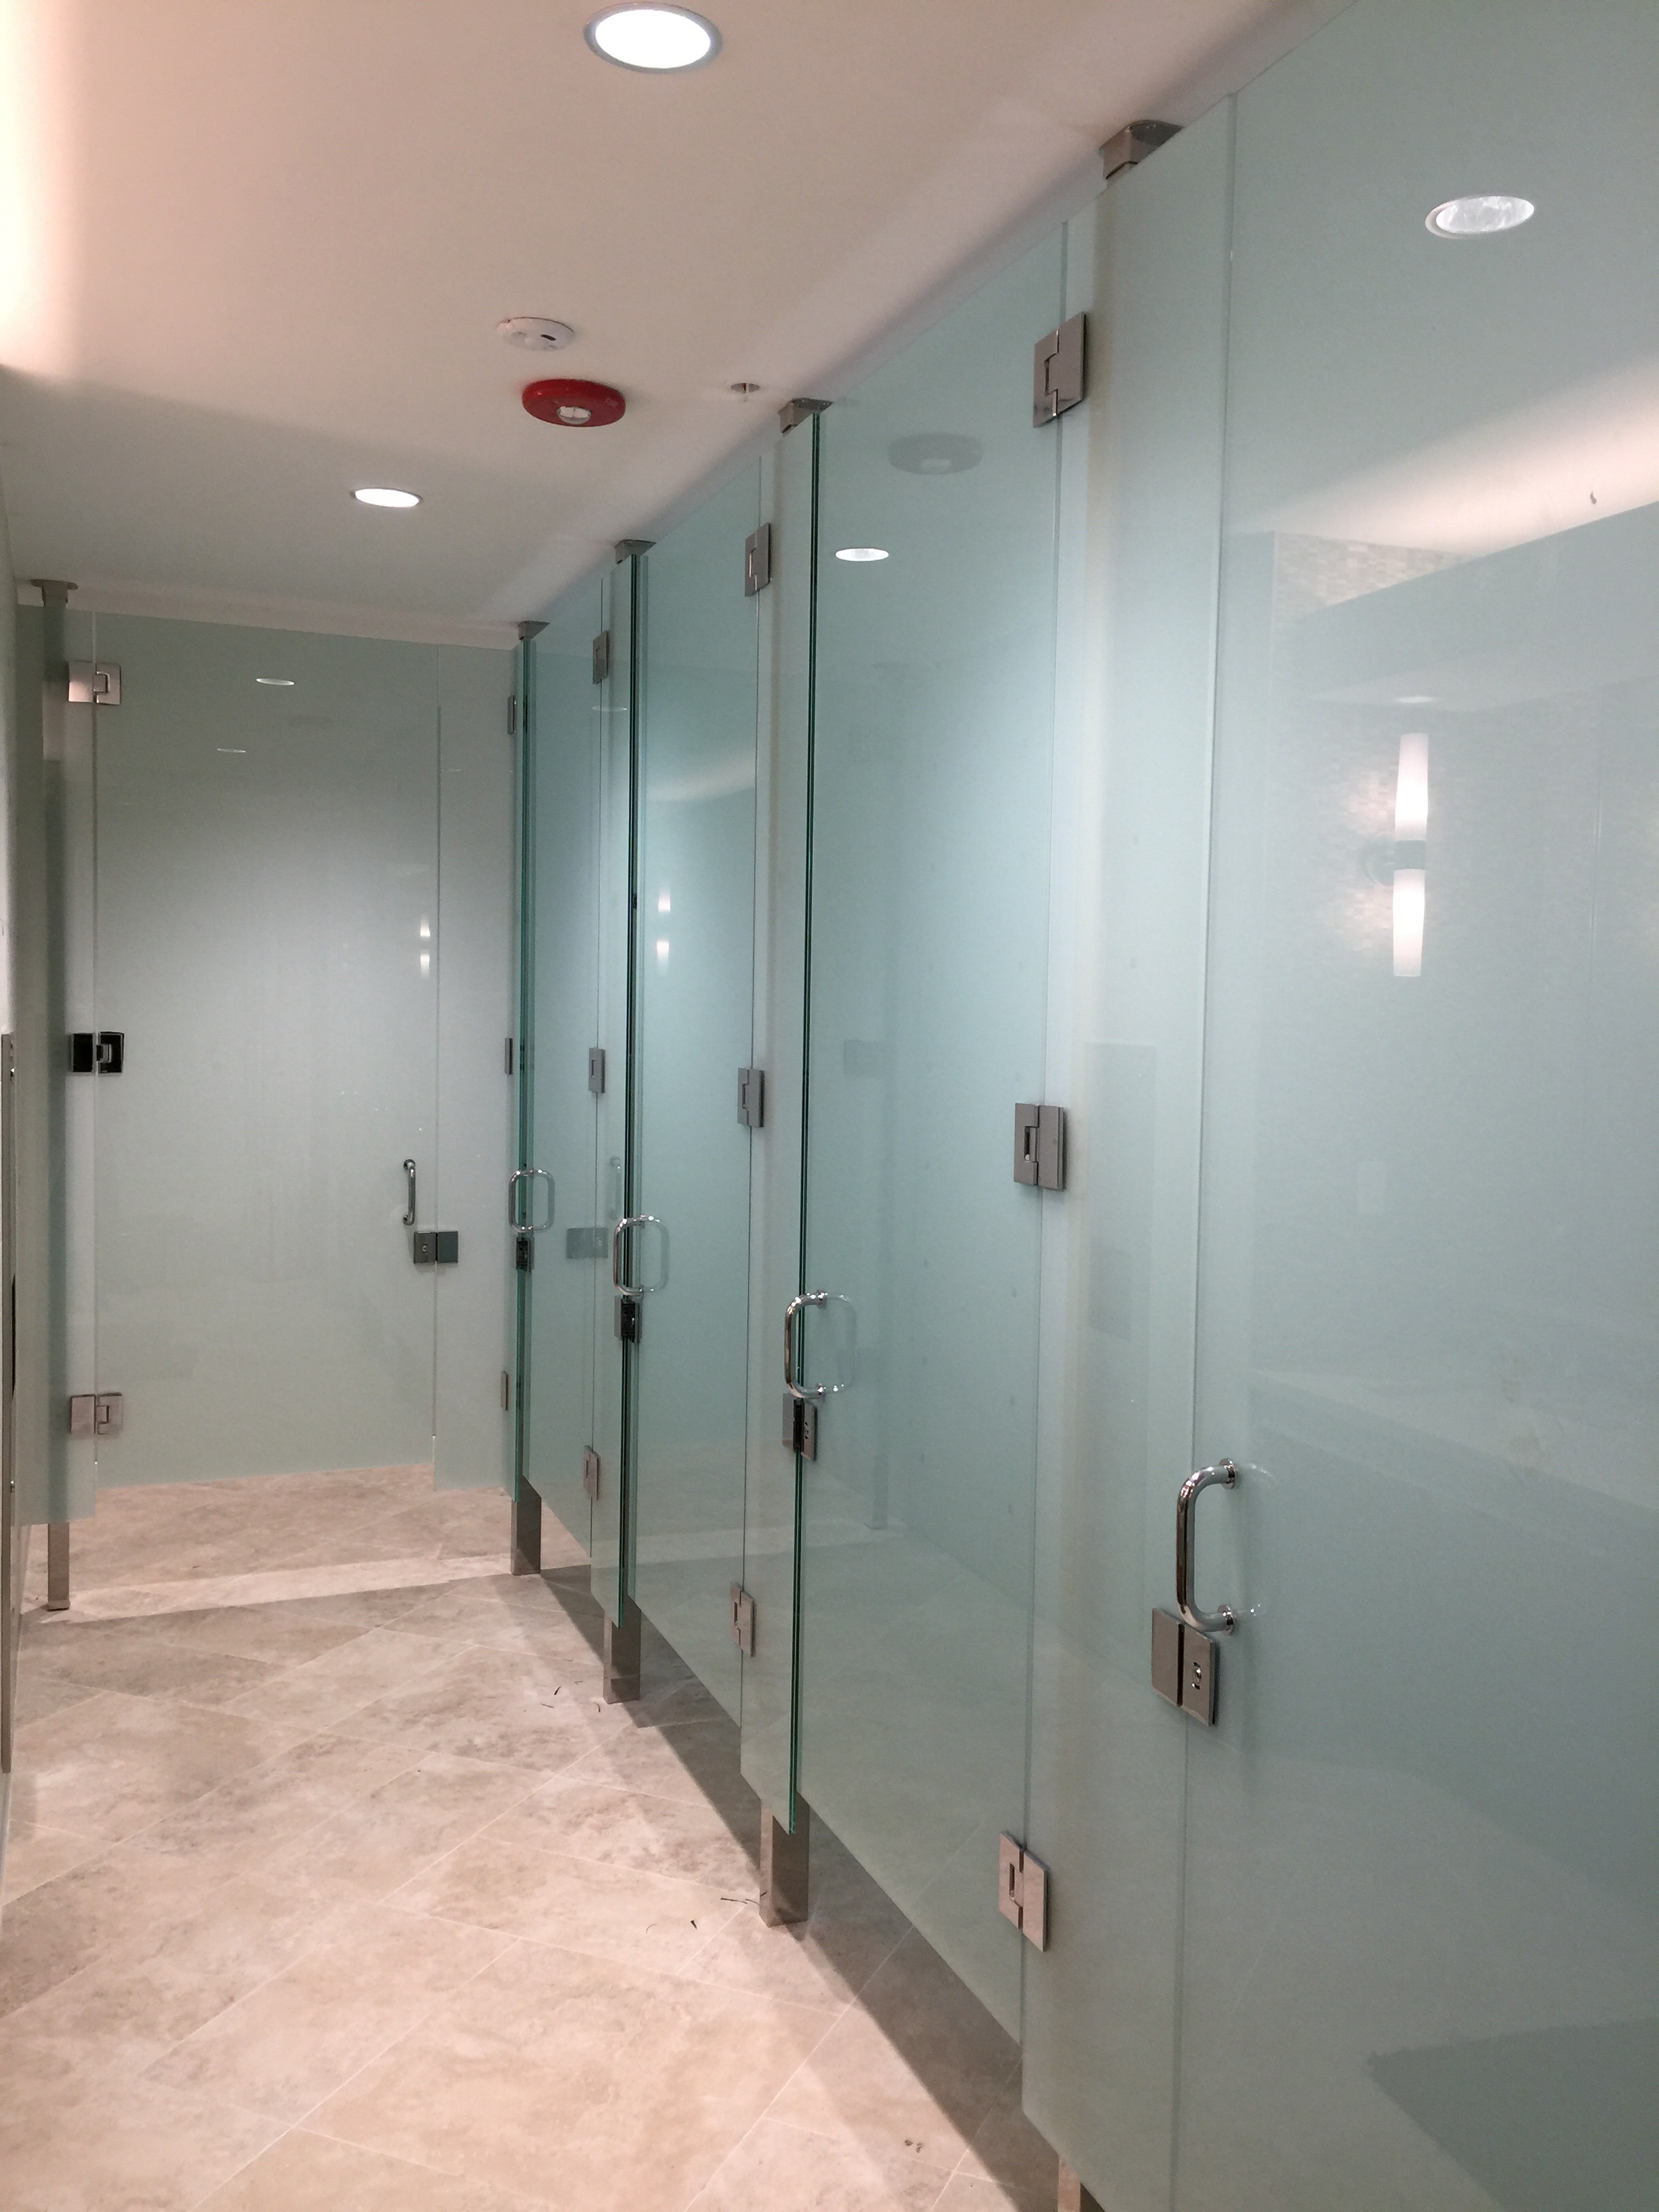 Showcase Shower Door Company restroom partitions